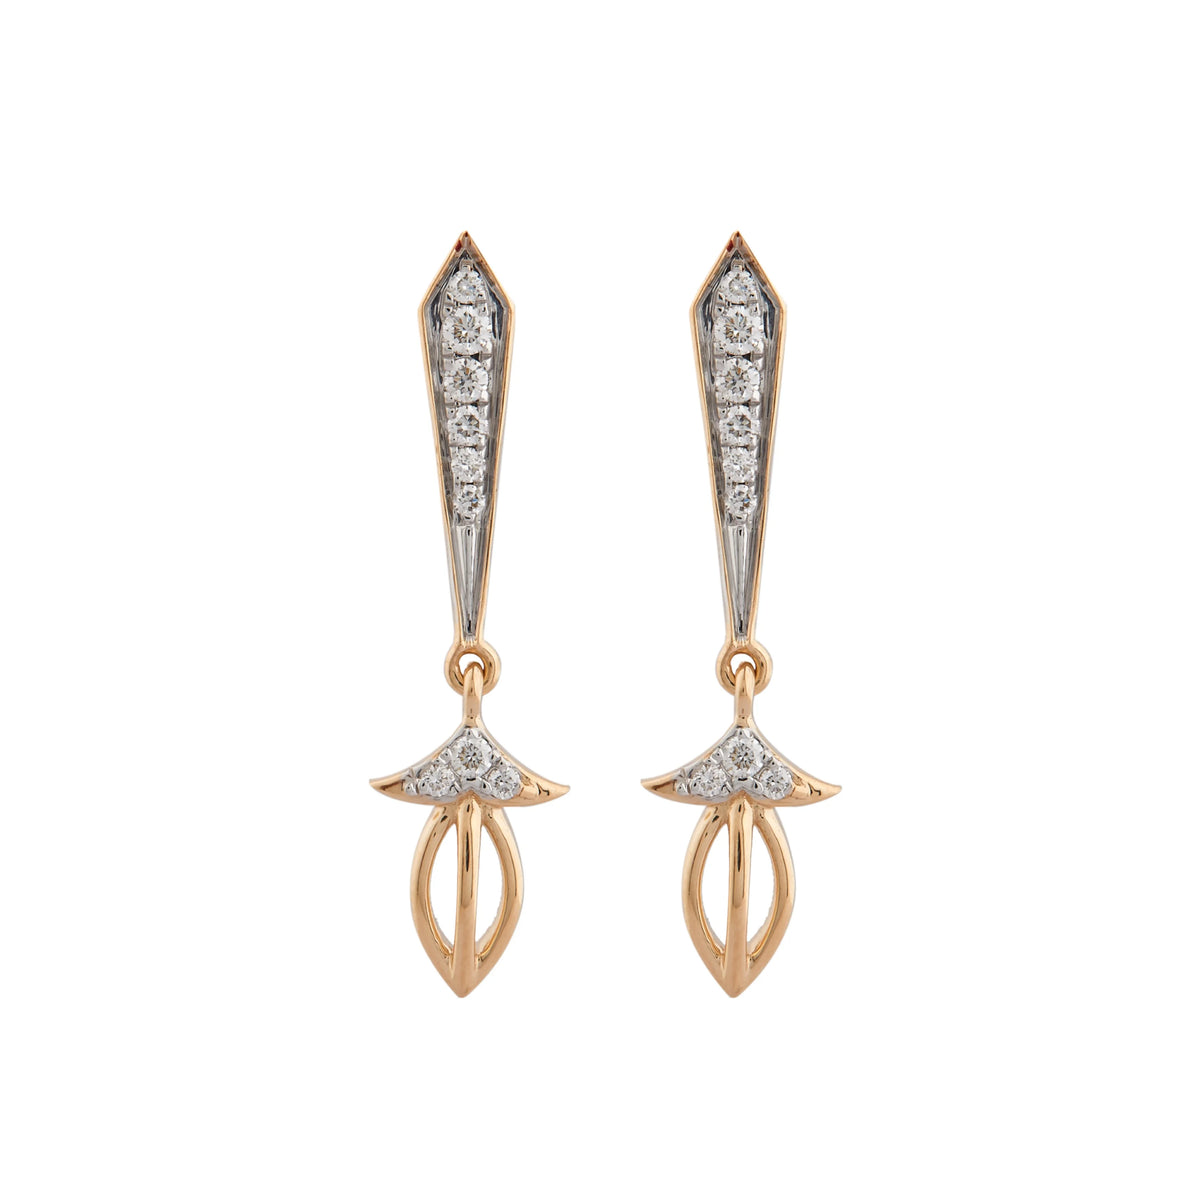 Tadeonal Diamond earring